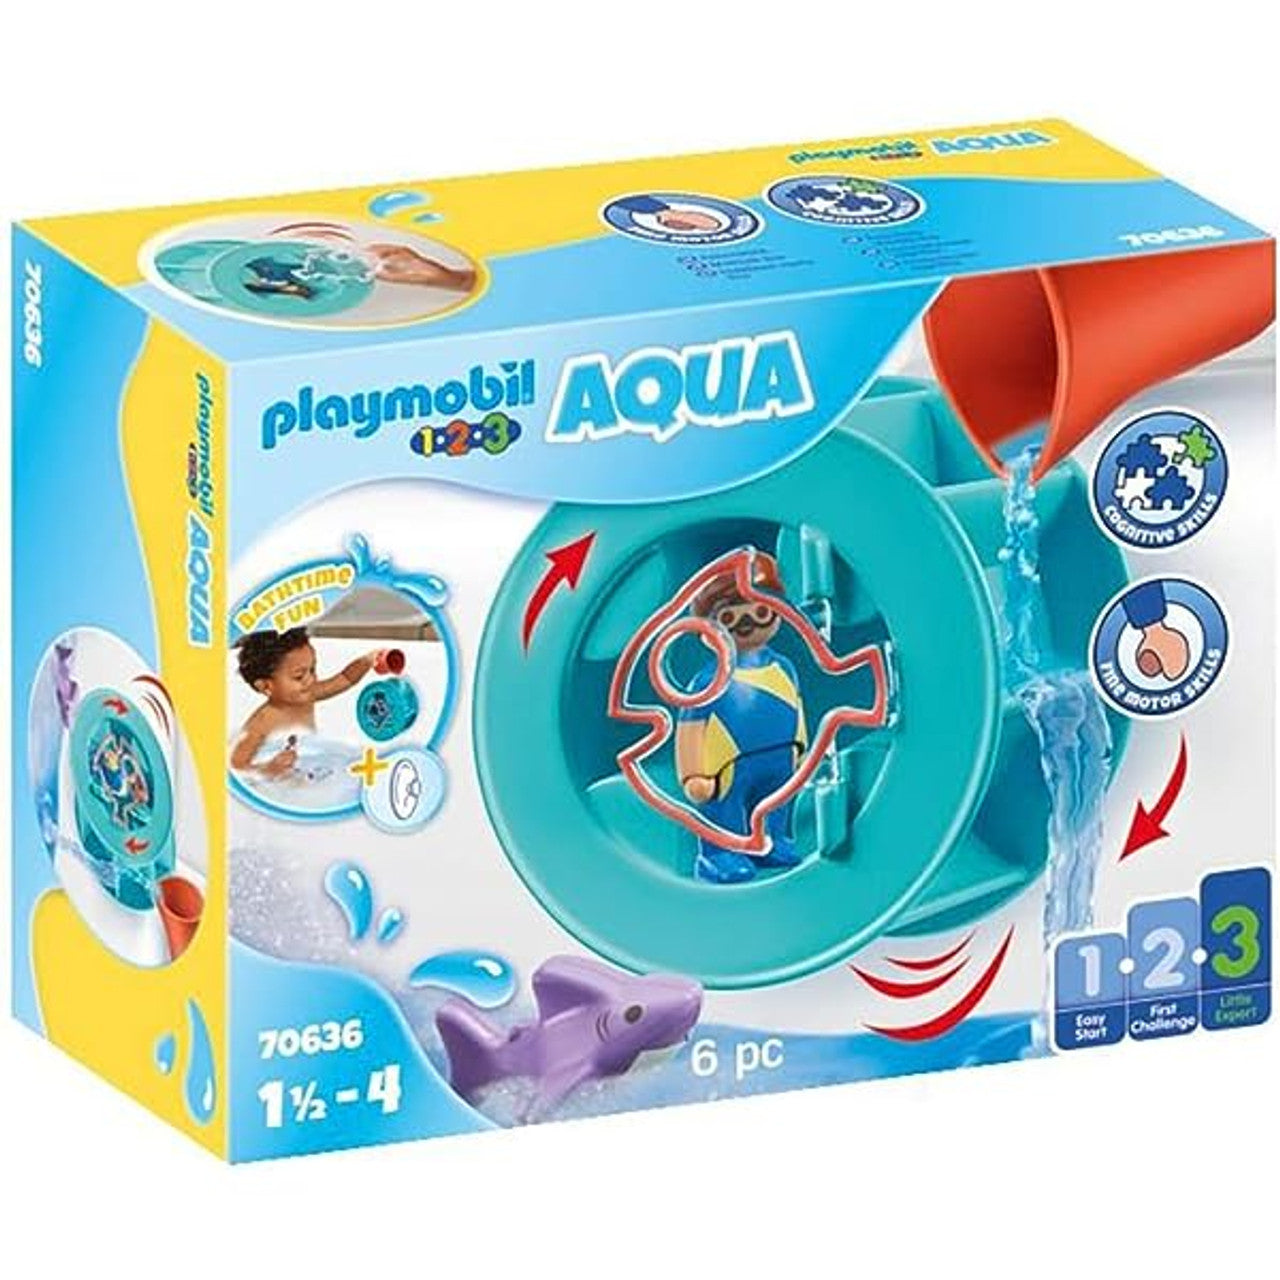 Playmobil 123 Aqua 70636 Water Wheel with Baby Shark